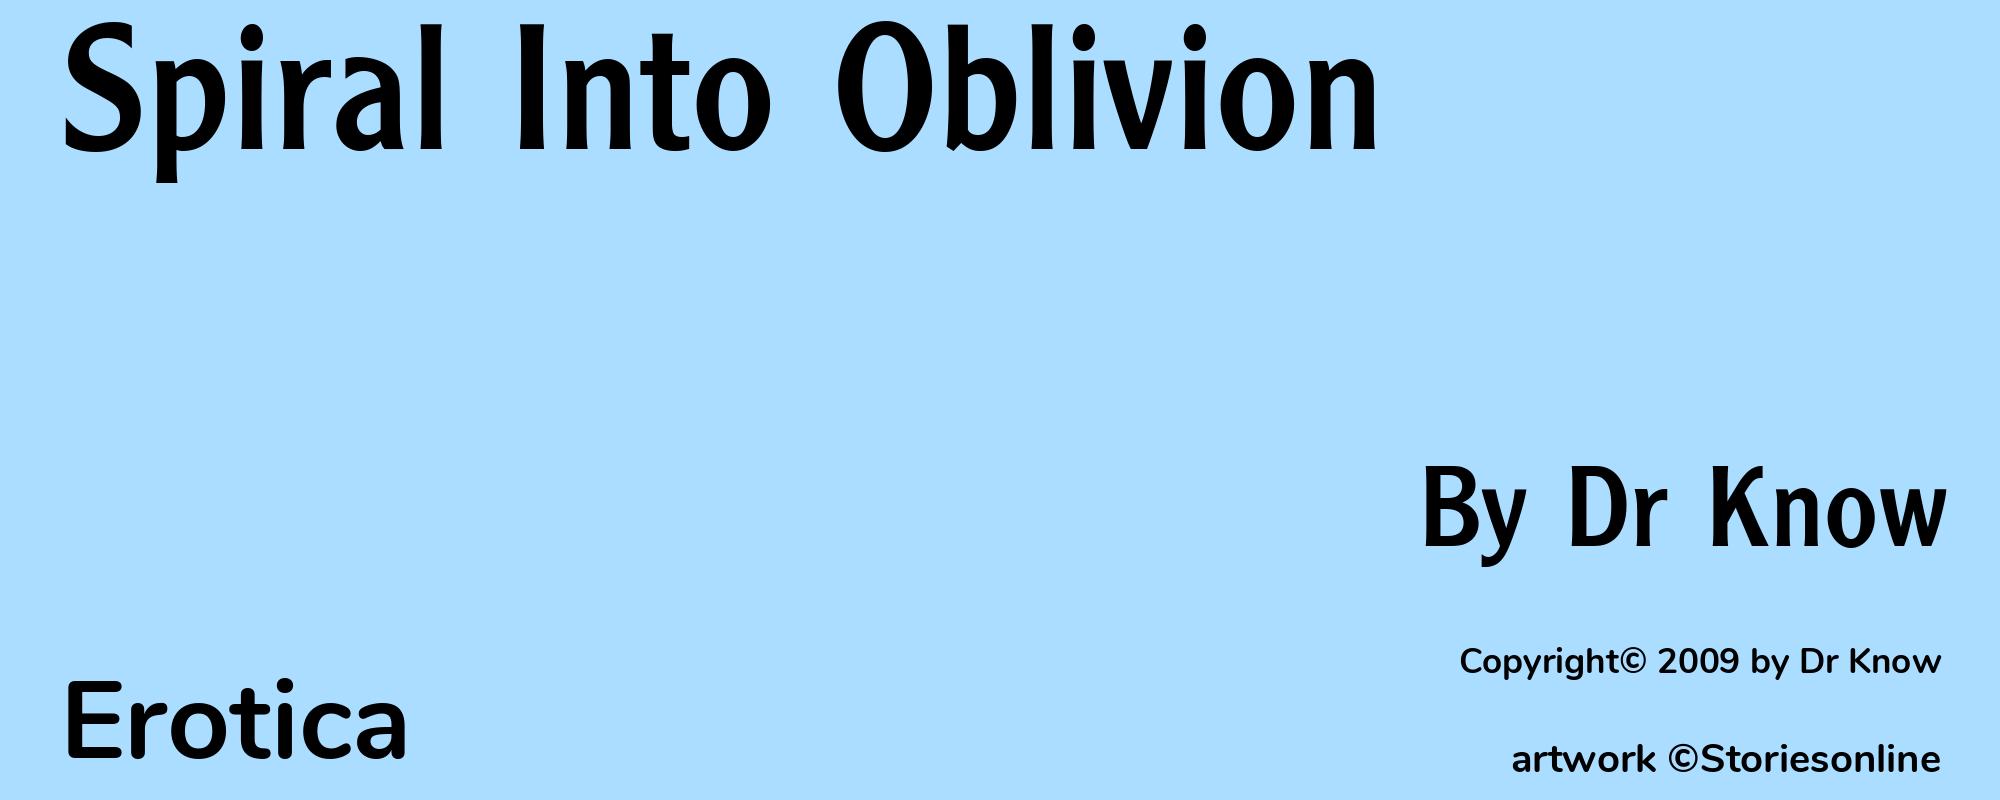 Spiral Into Oblivion - Cover